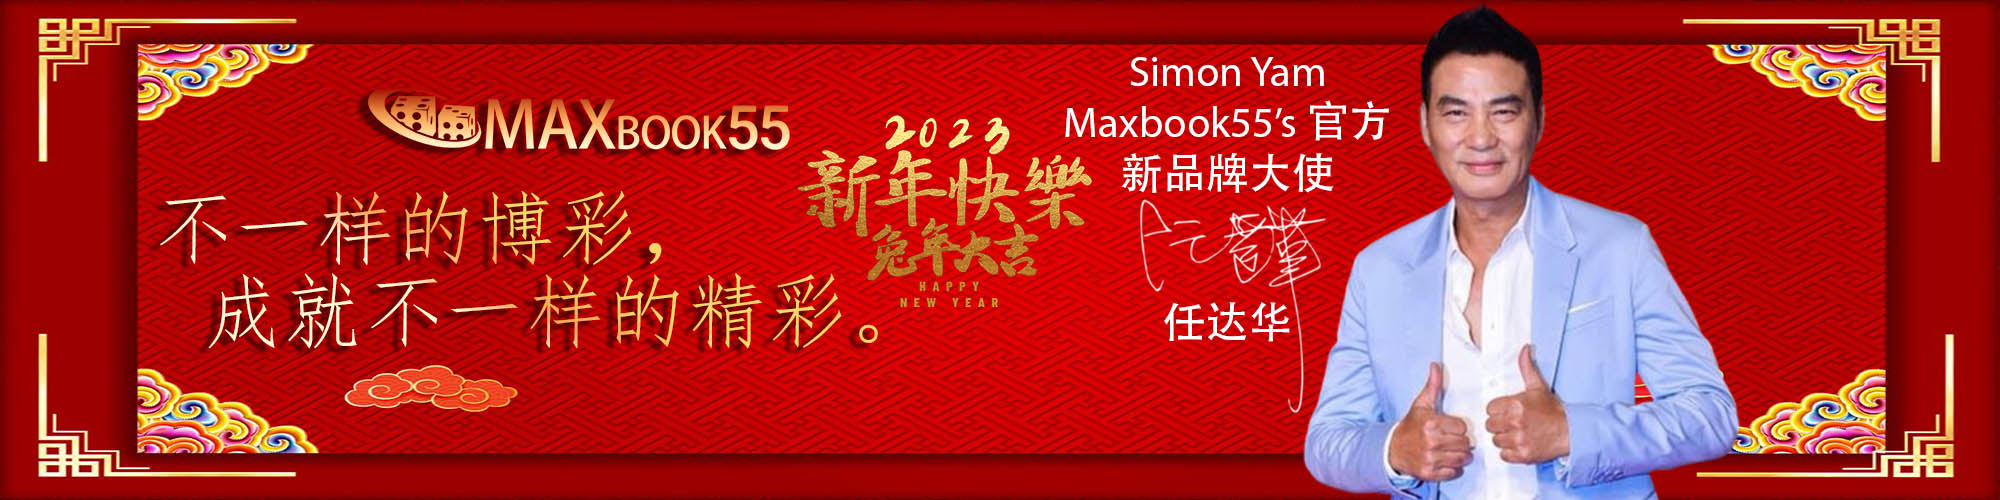 MAXBOOK55 官方新品牌大使